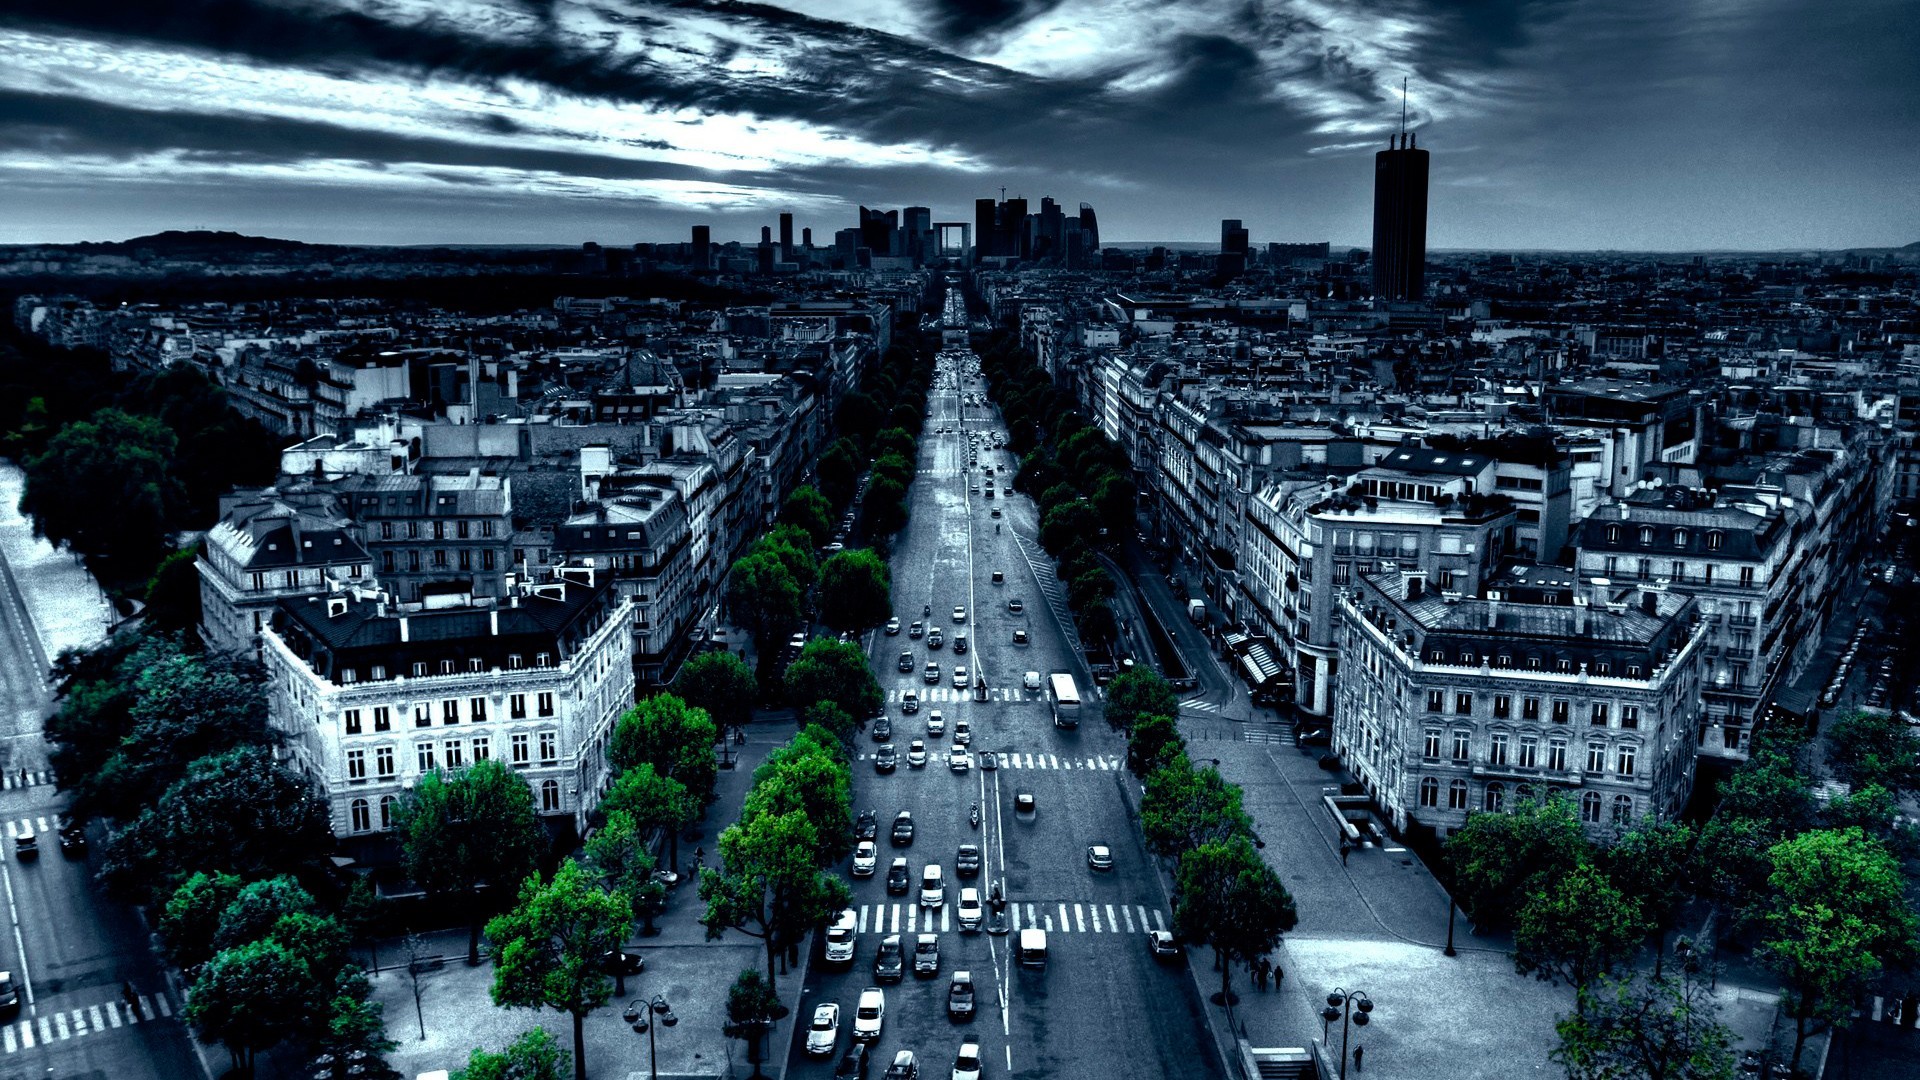 Wallpapers France Houses Paris Street Night Street lights Cities Image  480192 Download  Paris photos Paris street Paris